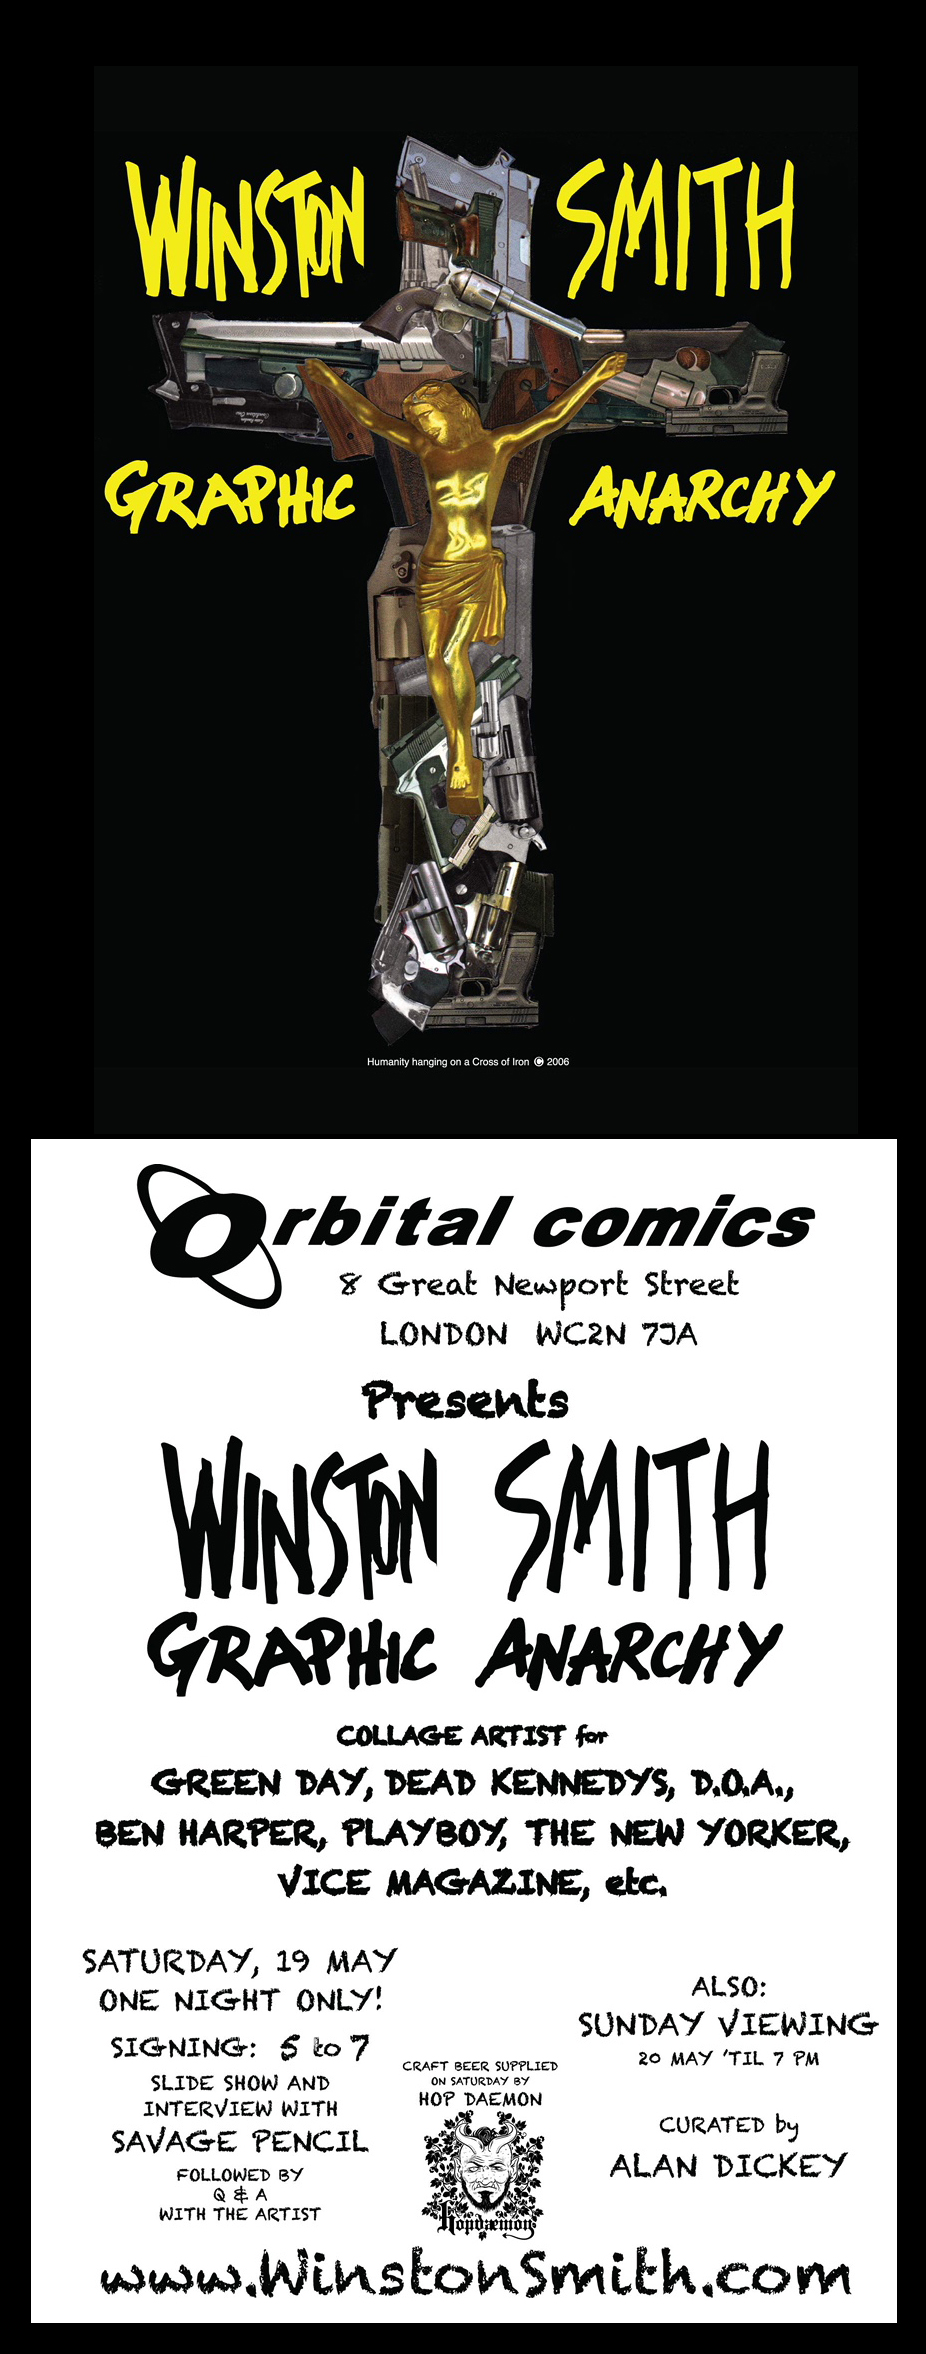 Orbital Comics presents Winston Smith Graphic Anarchy